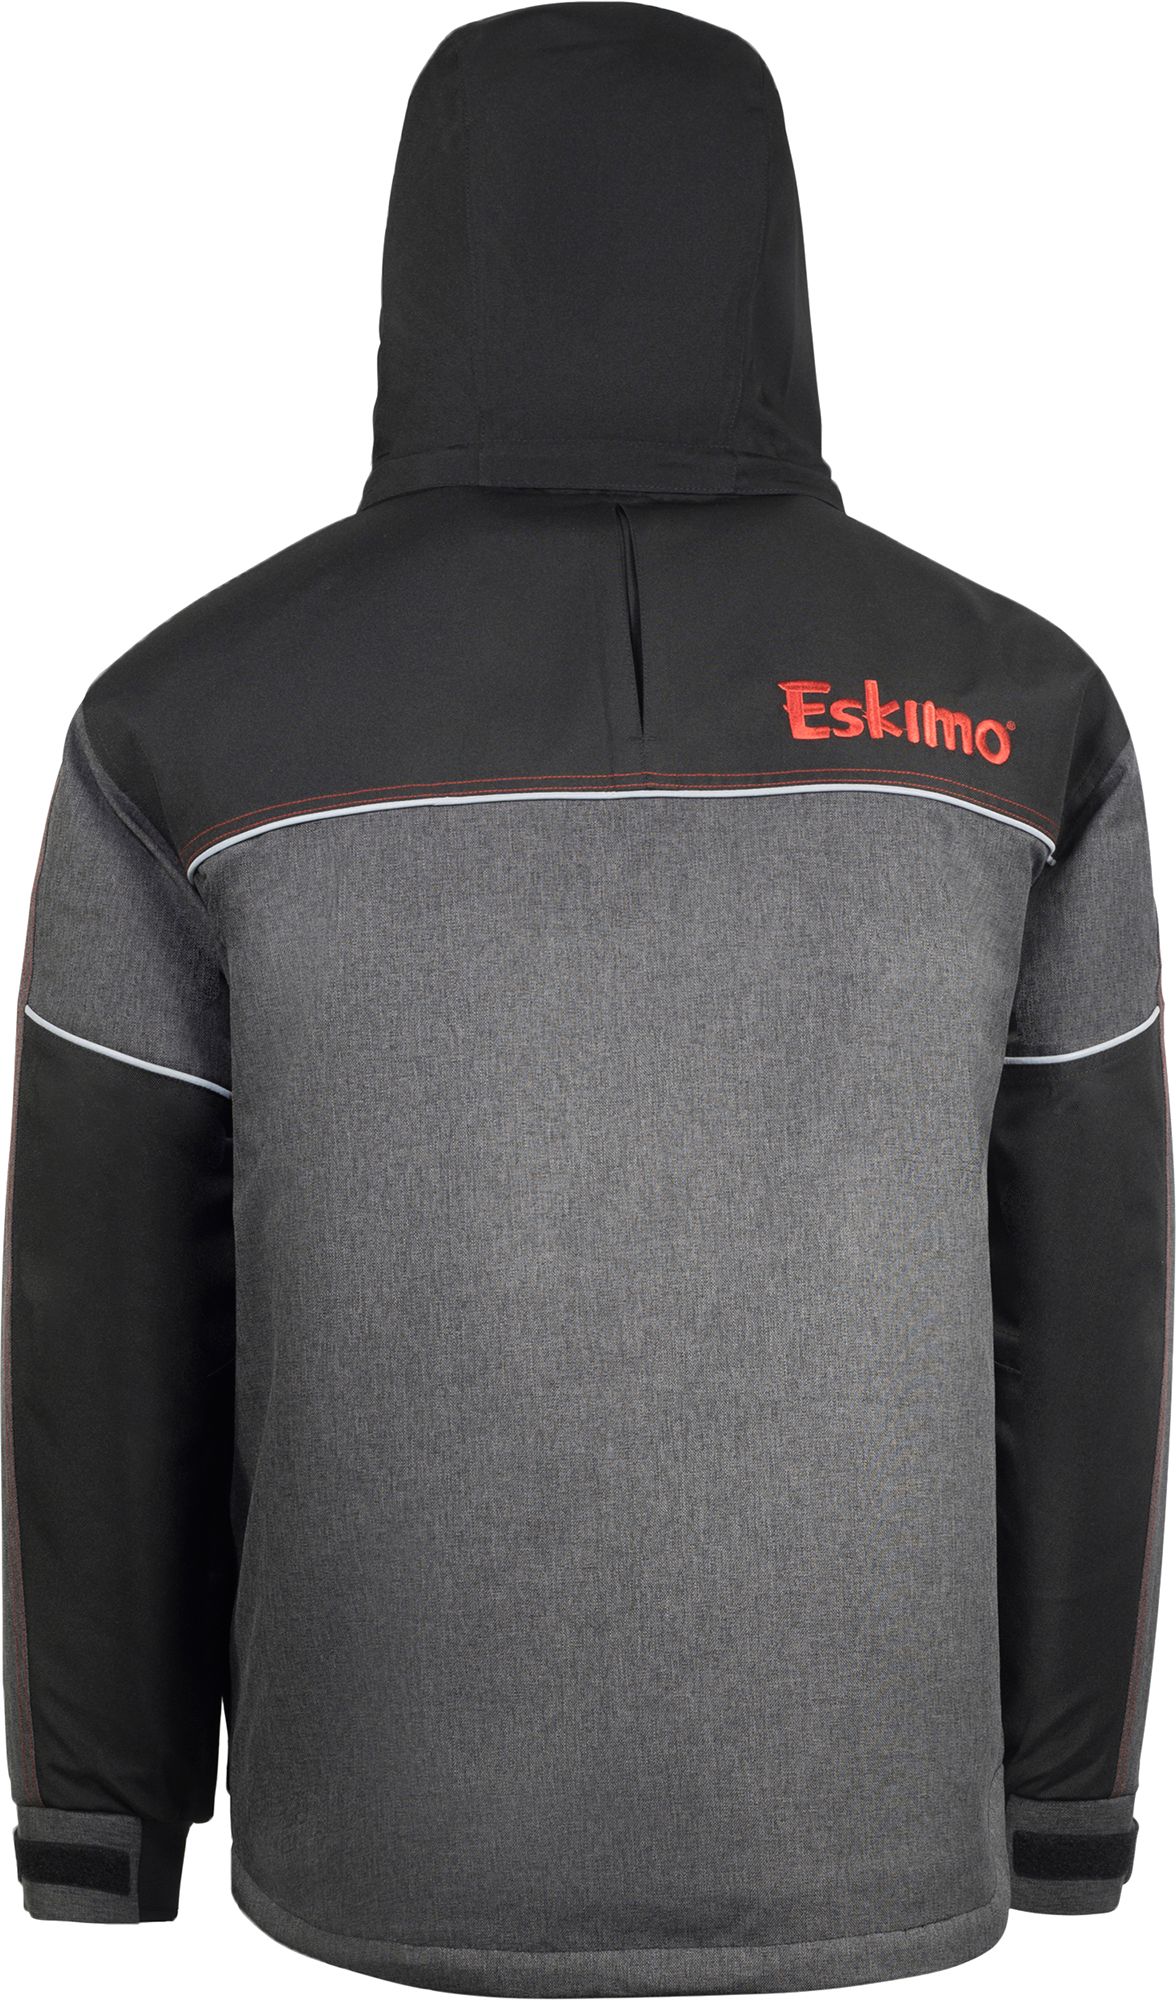 Dick's Sporting Goods Eskimo Men's Keeper Jacket | The Market Place